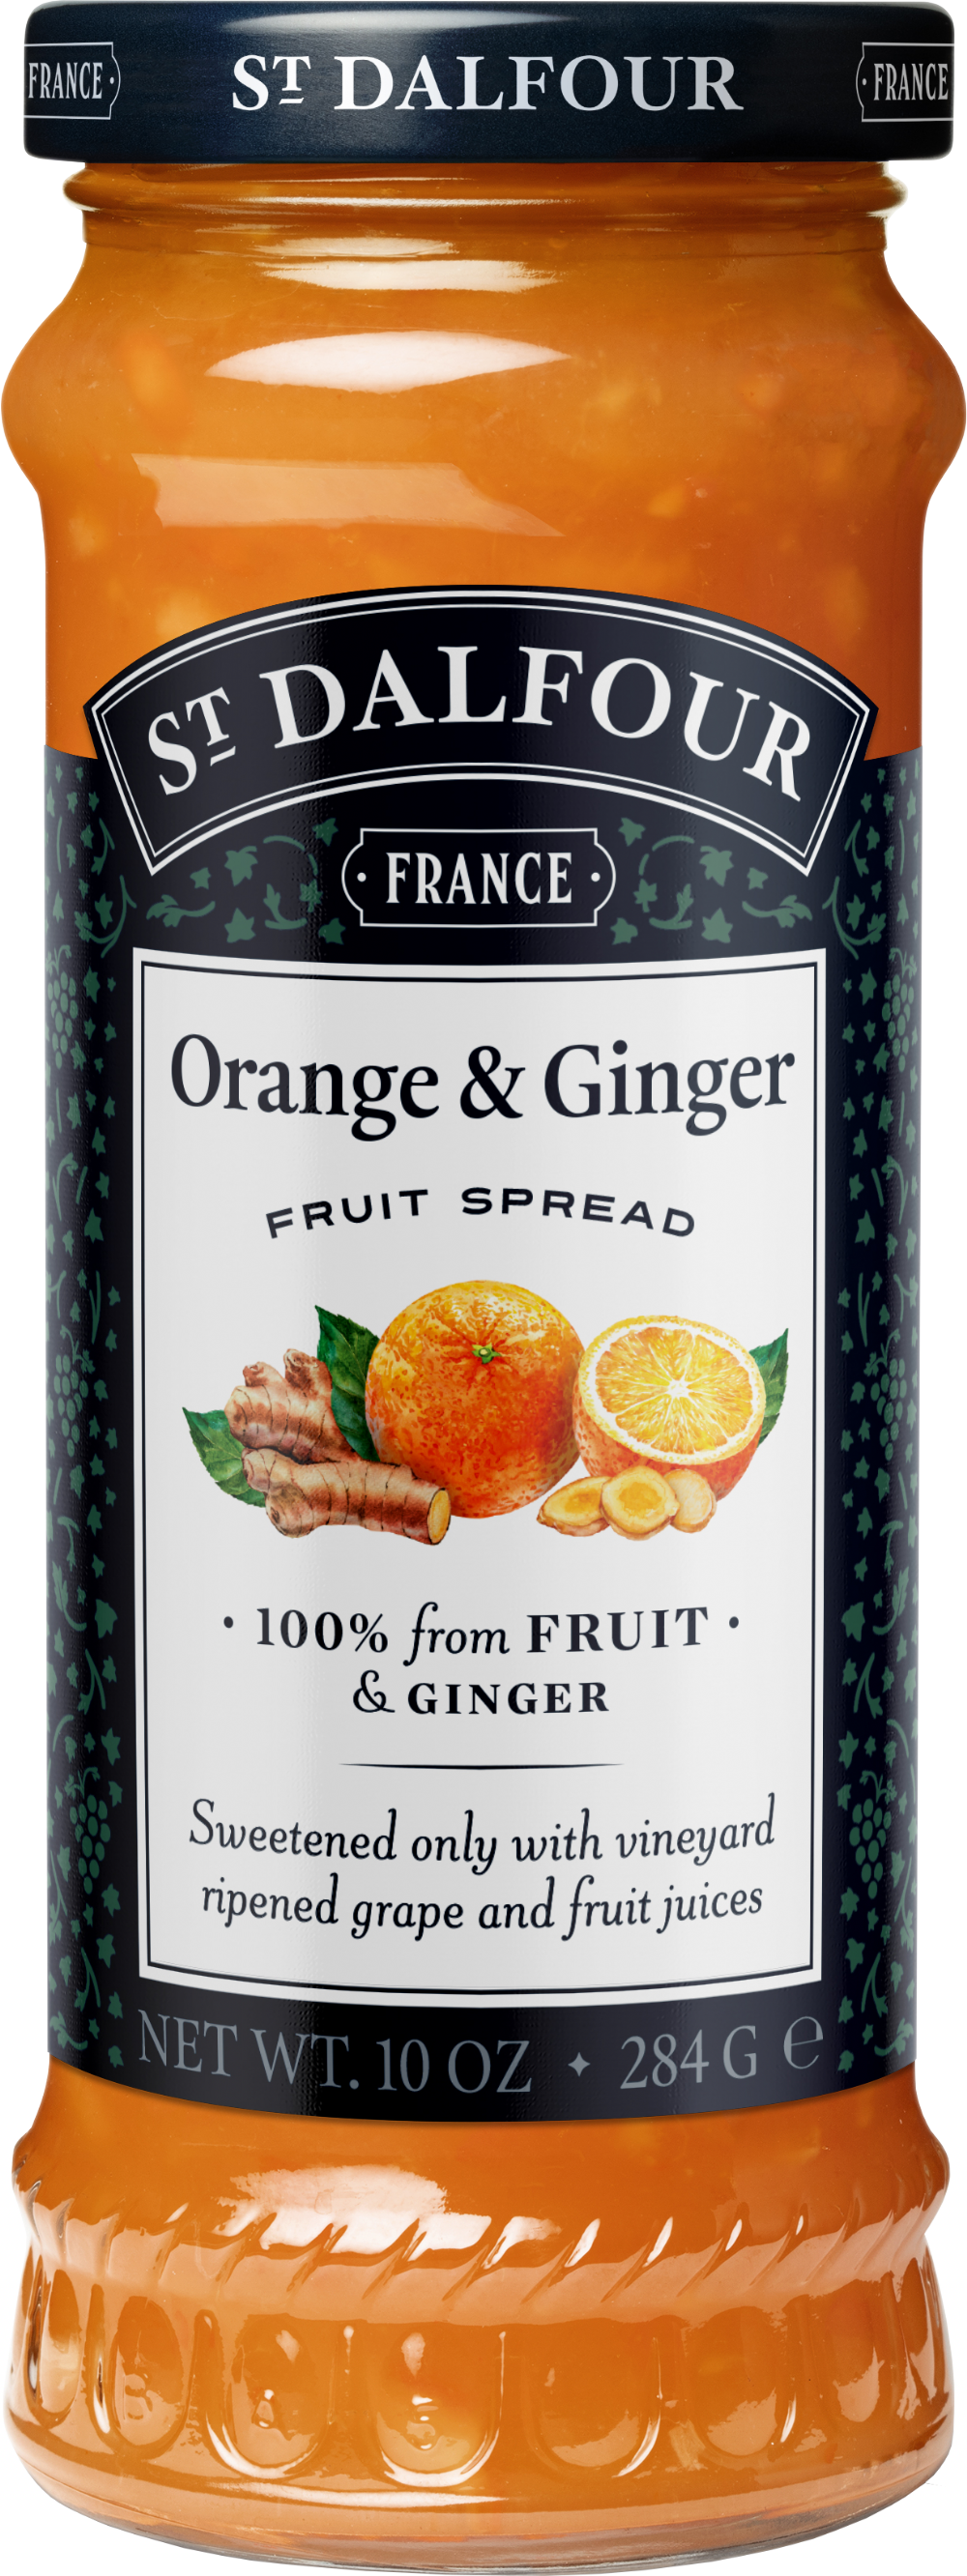 ST DALFOUR Orange & Ginger Fruit Spread 284g